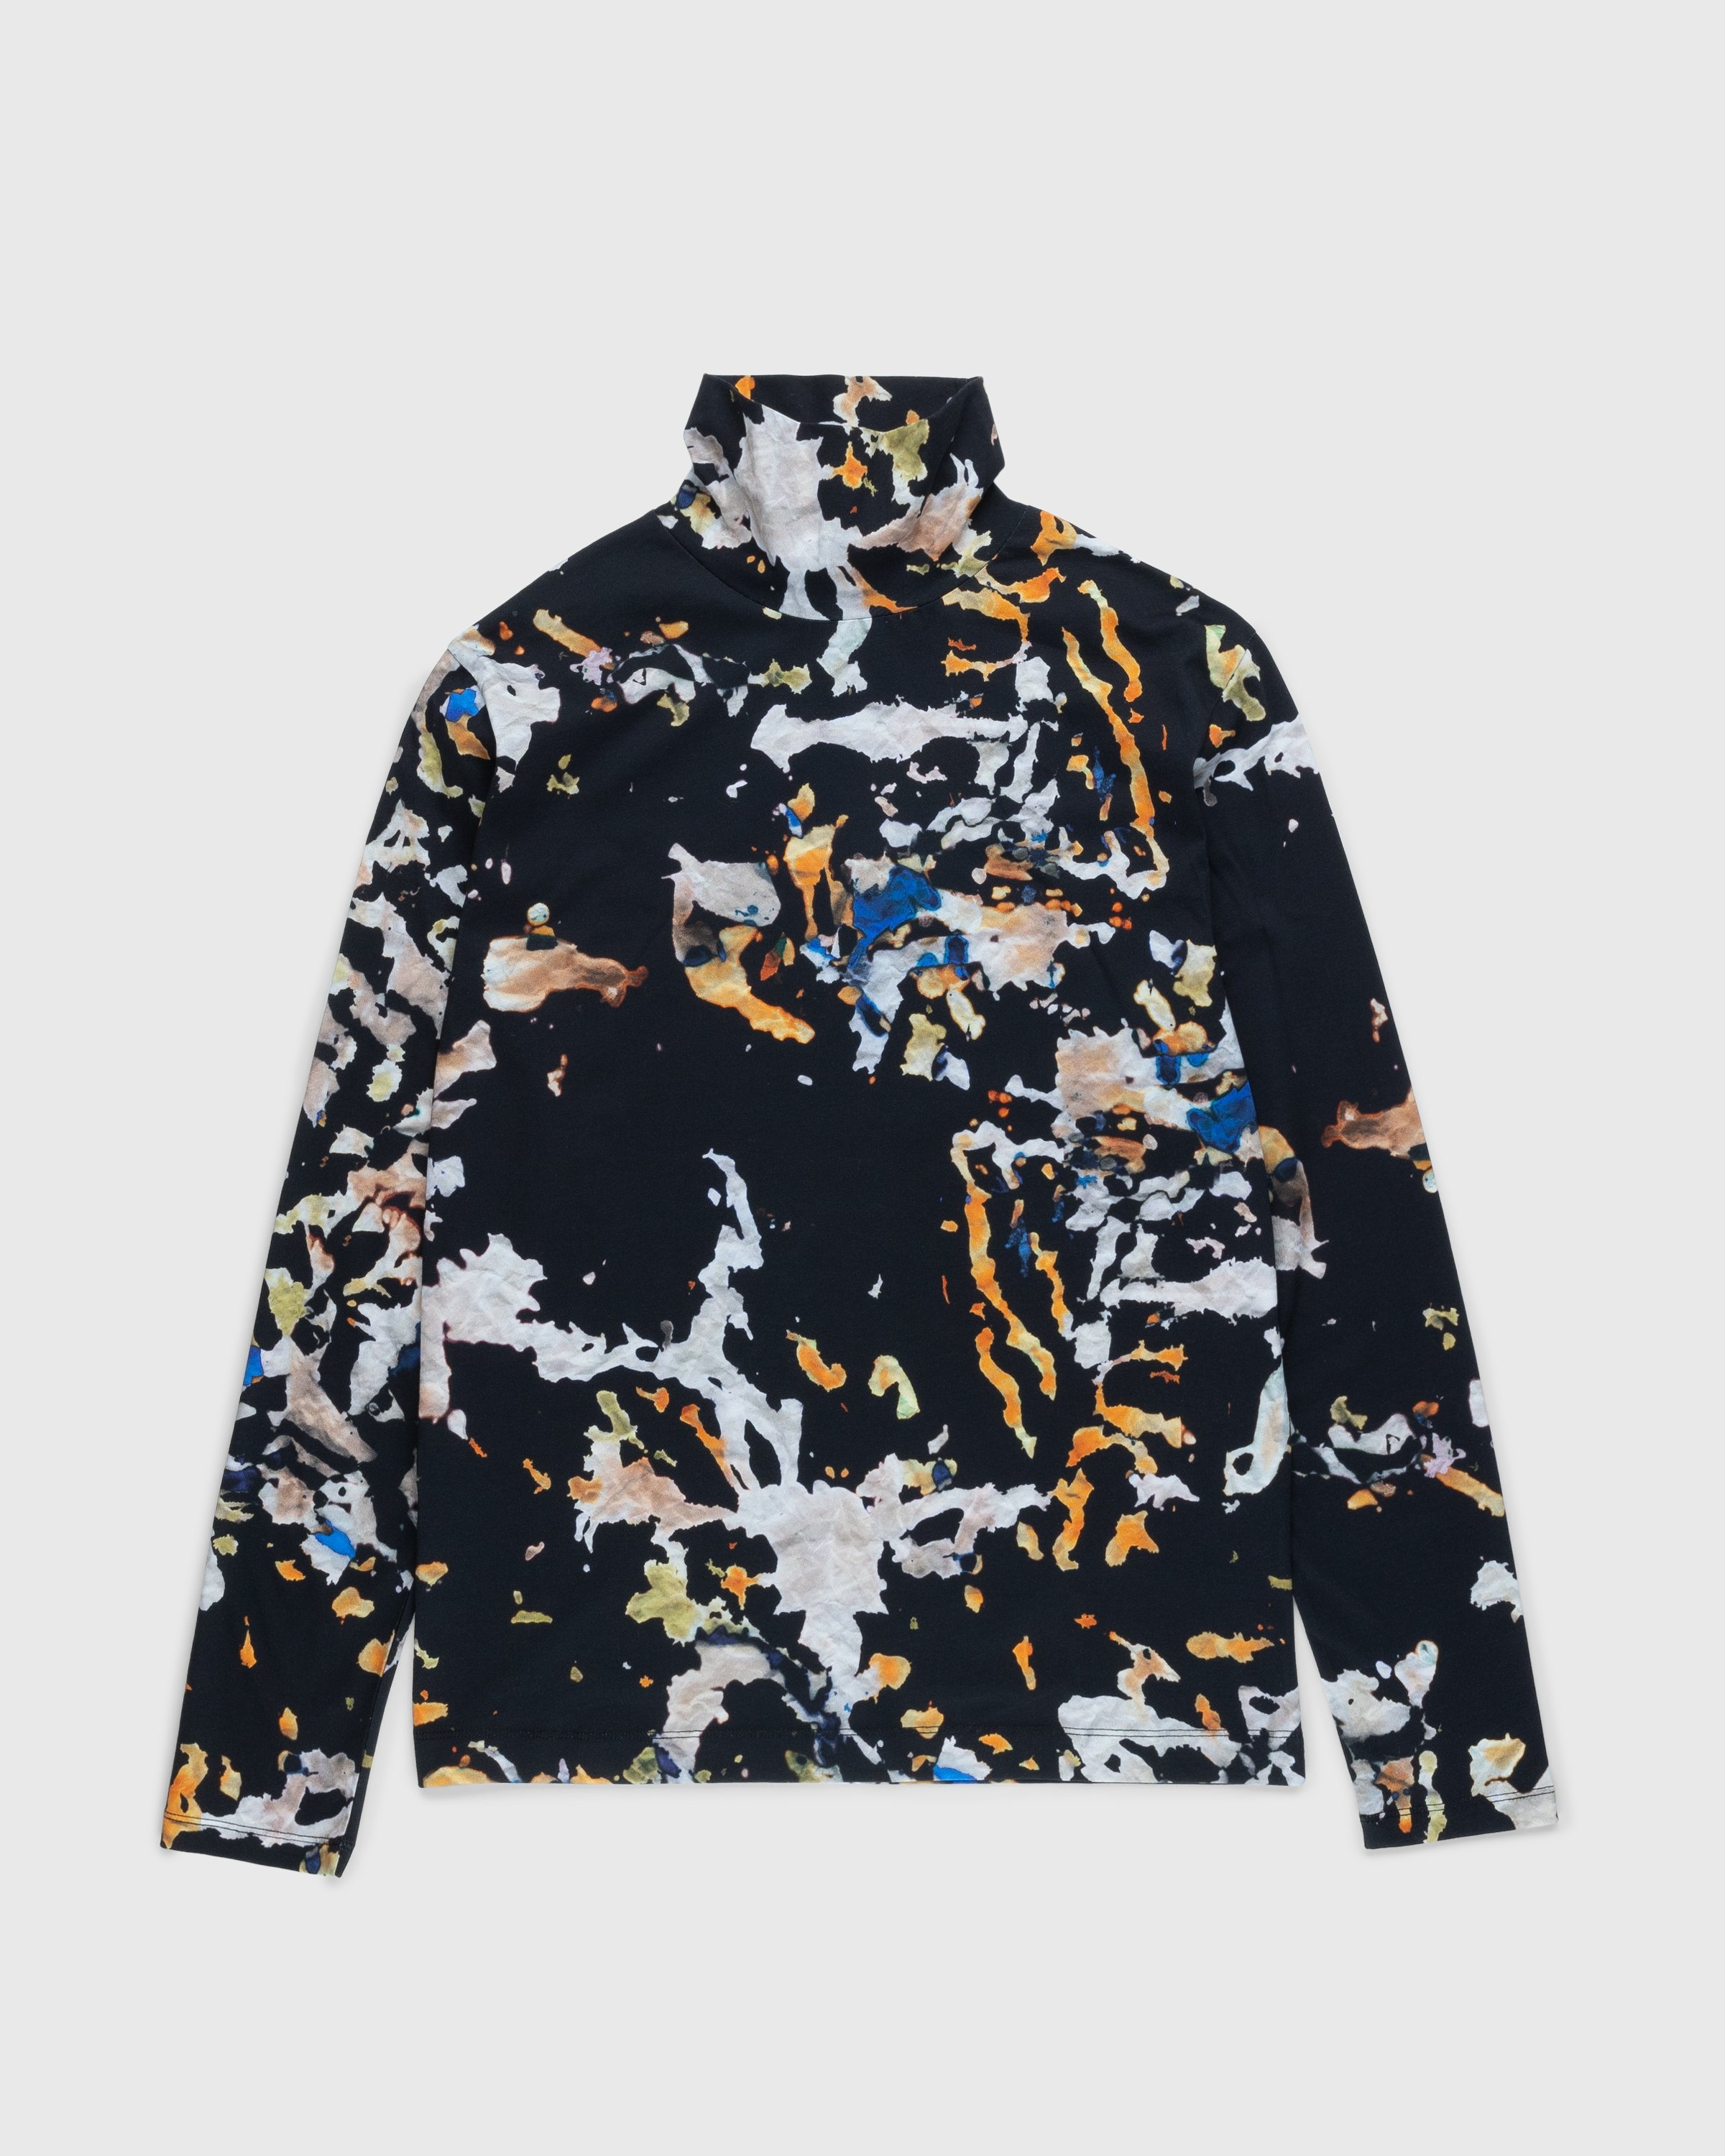 Dries van Noten – Heyzo Turtleneck Jersey Shirt Multi - Sweats - Multi - Image 1